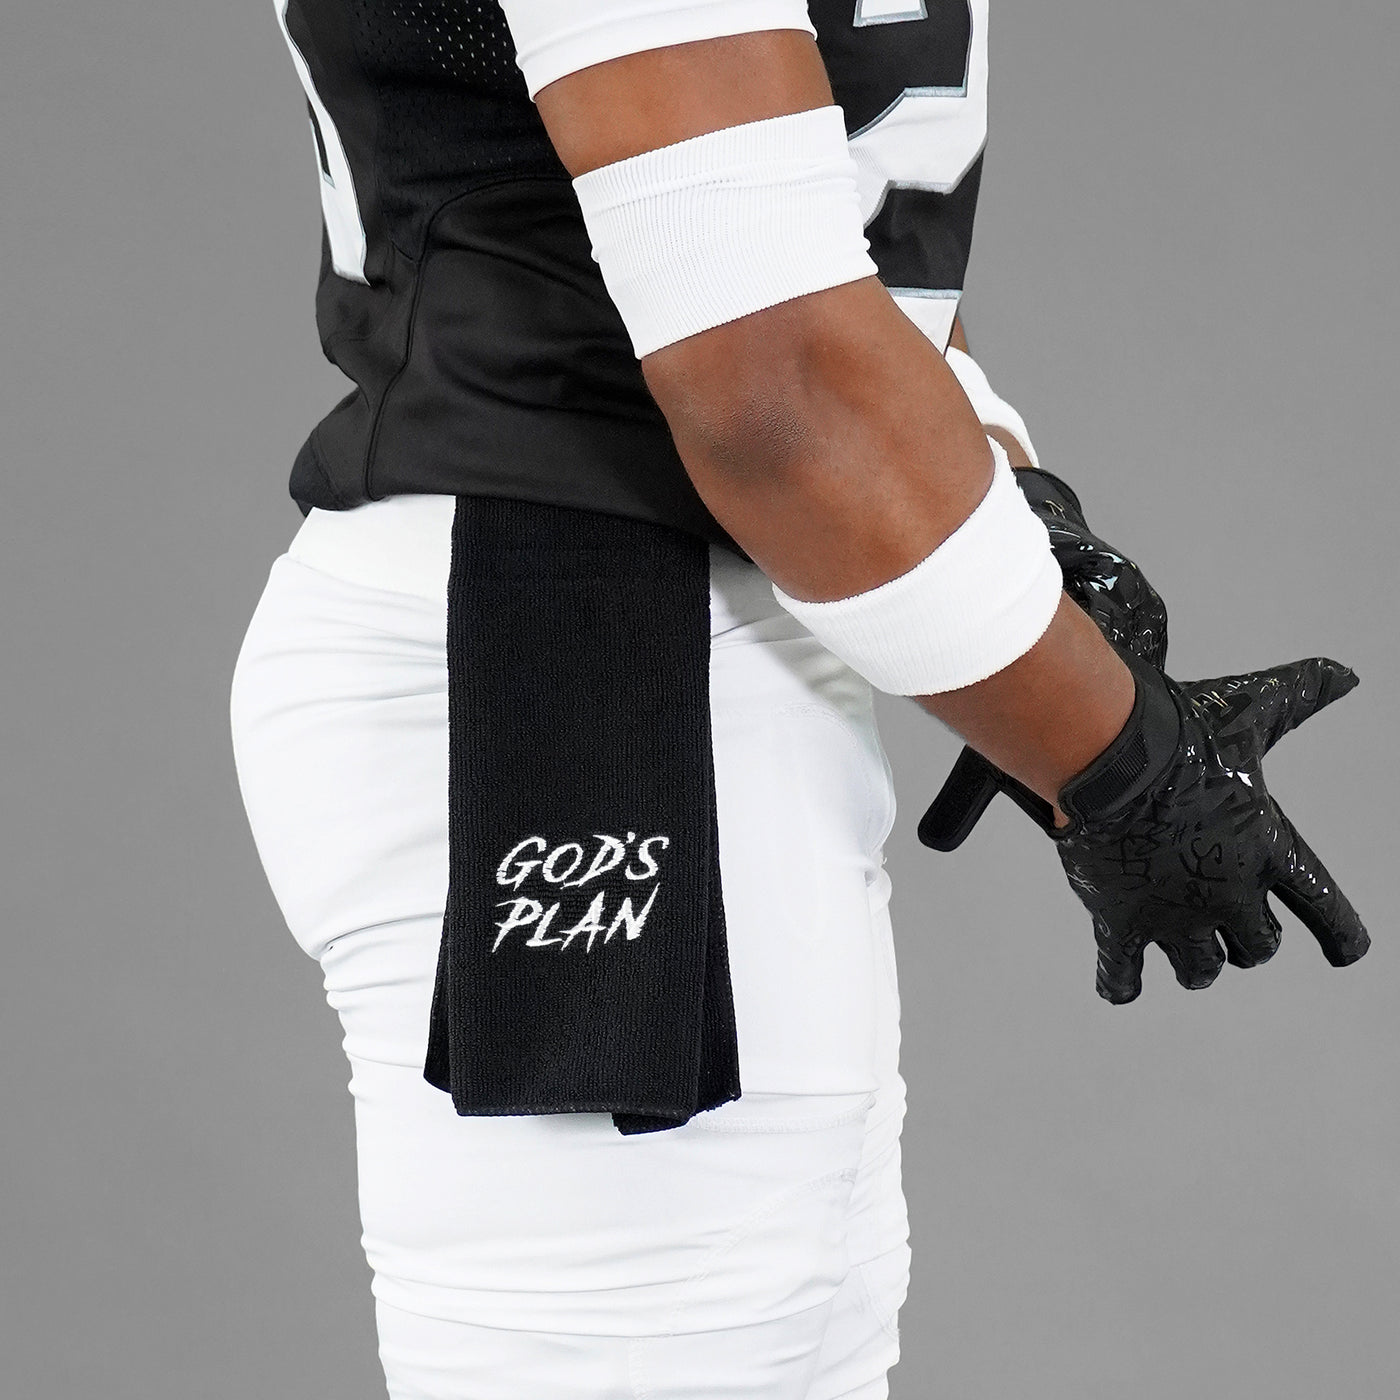 God's Plan Black Football Towel